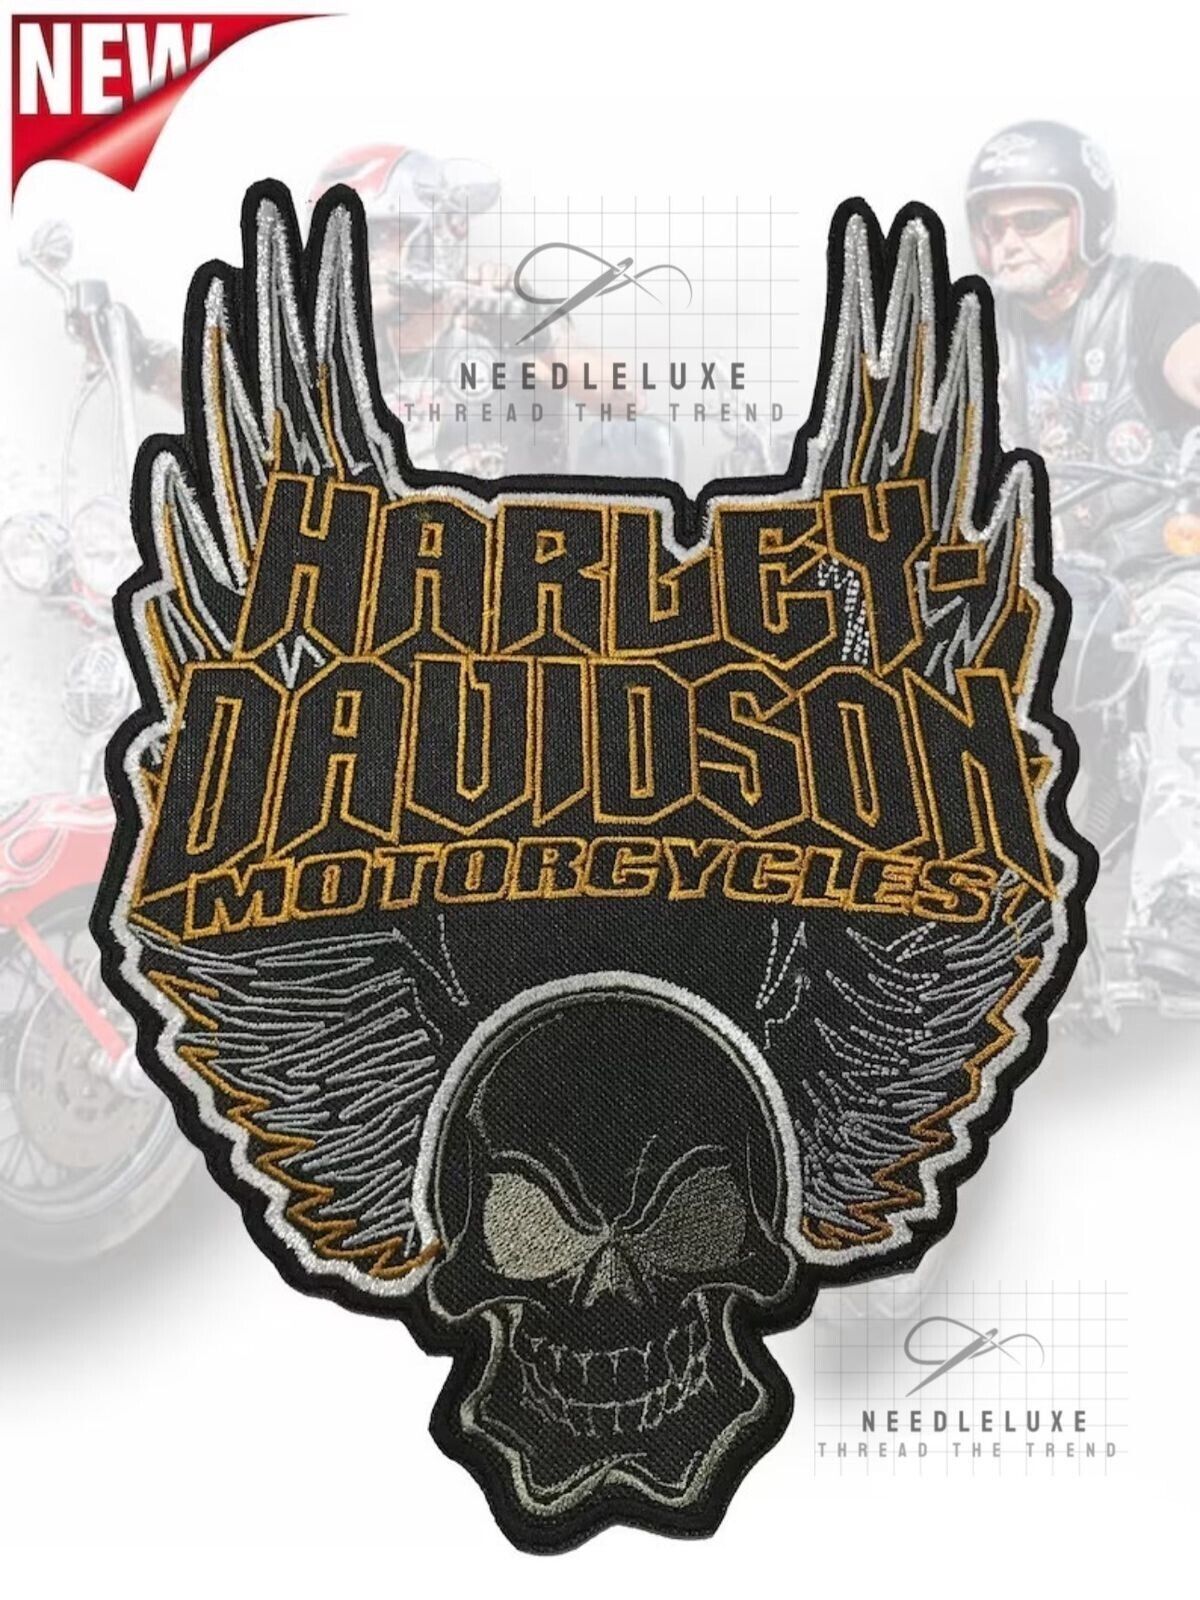 HARLEY DAVIDSON Skull Large Back Patch - Harley Motorcycle 12\